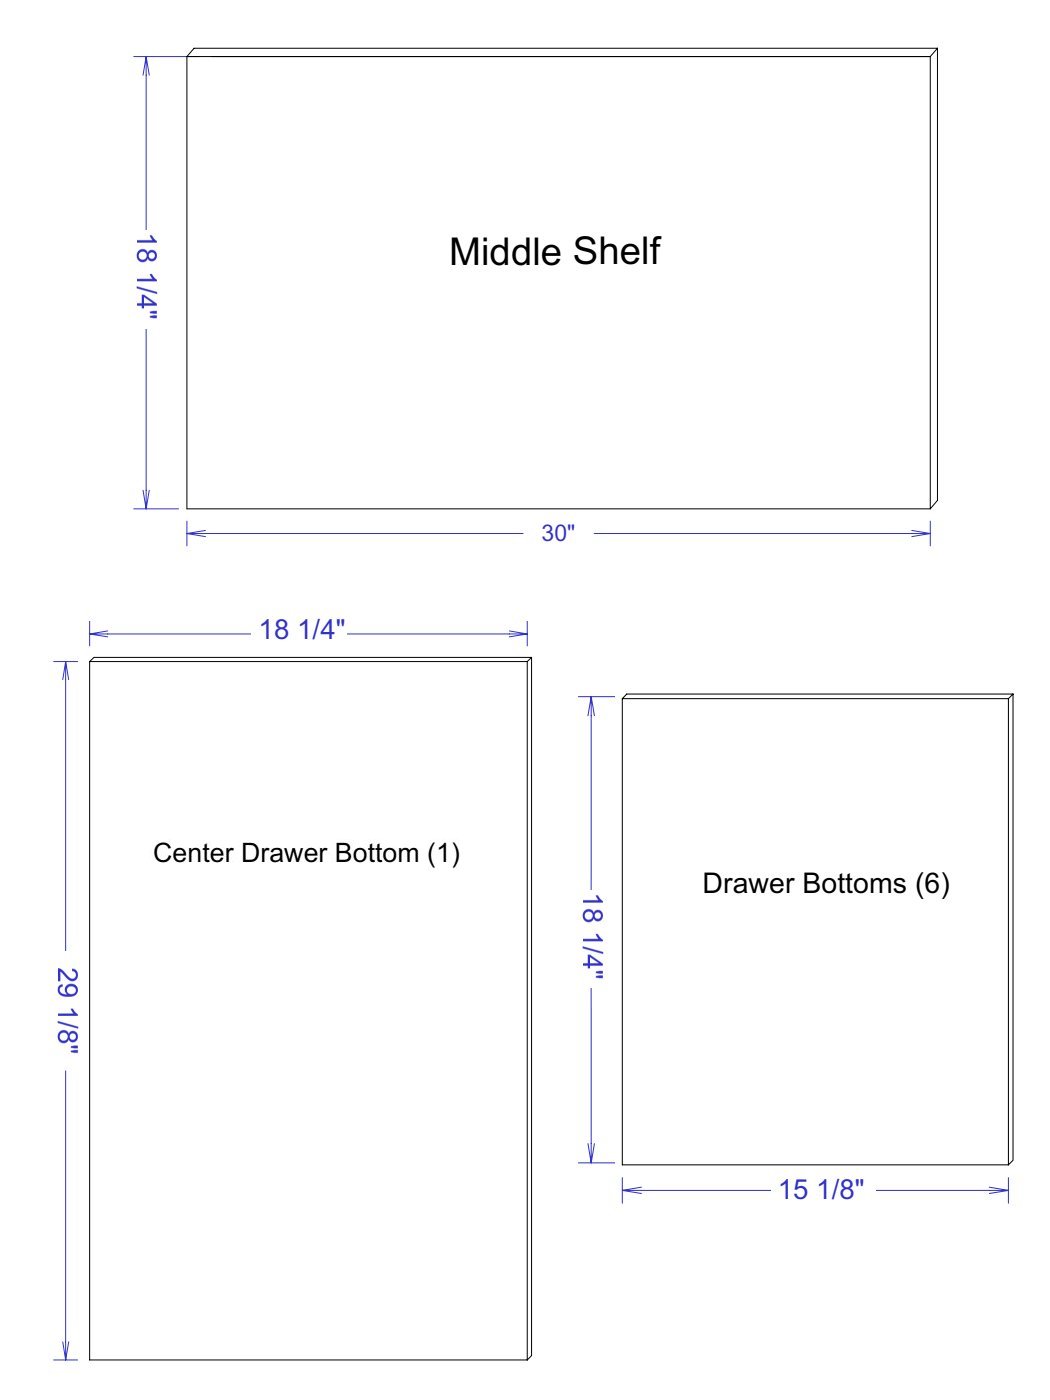 Drawer bottoms - Middle Shelf